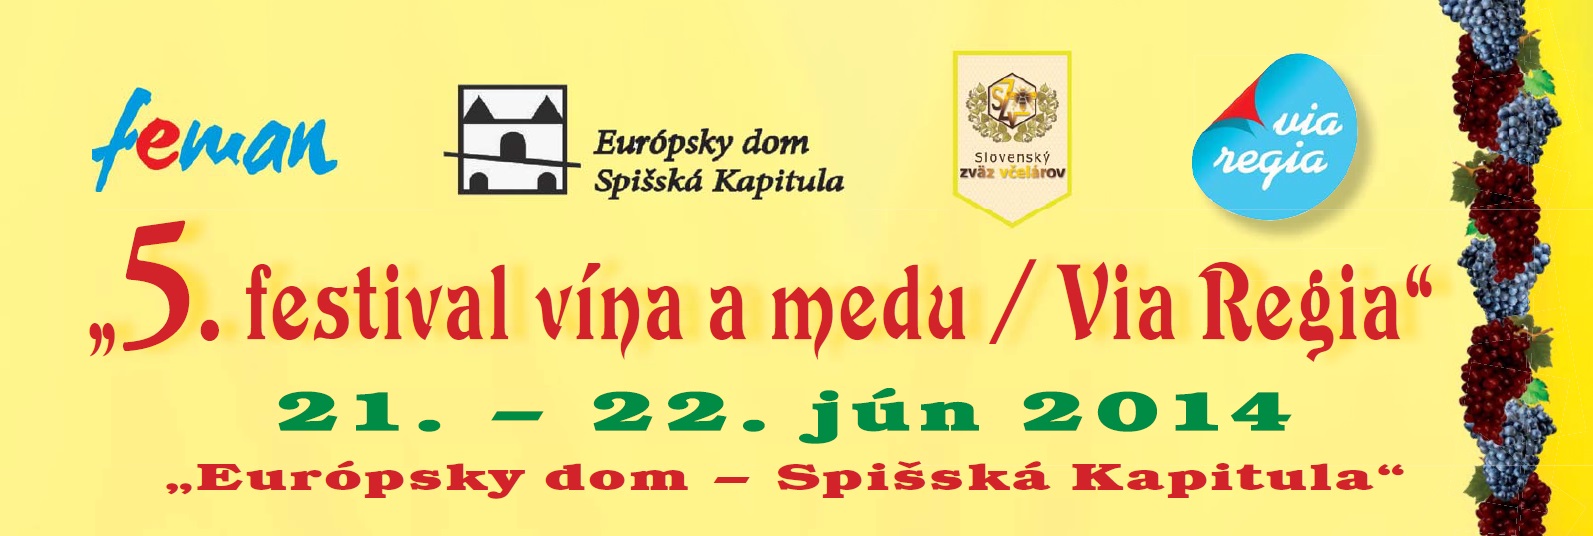 5. festival vna a medu - Via Regia 2014 Spisk Podhradie